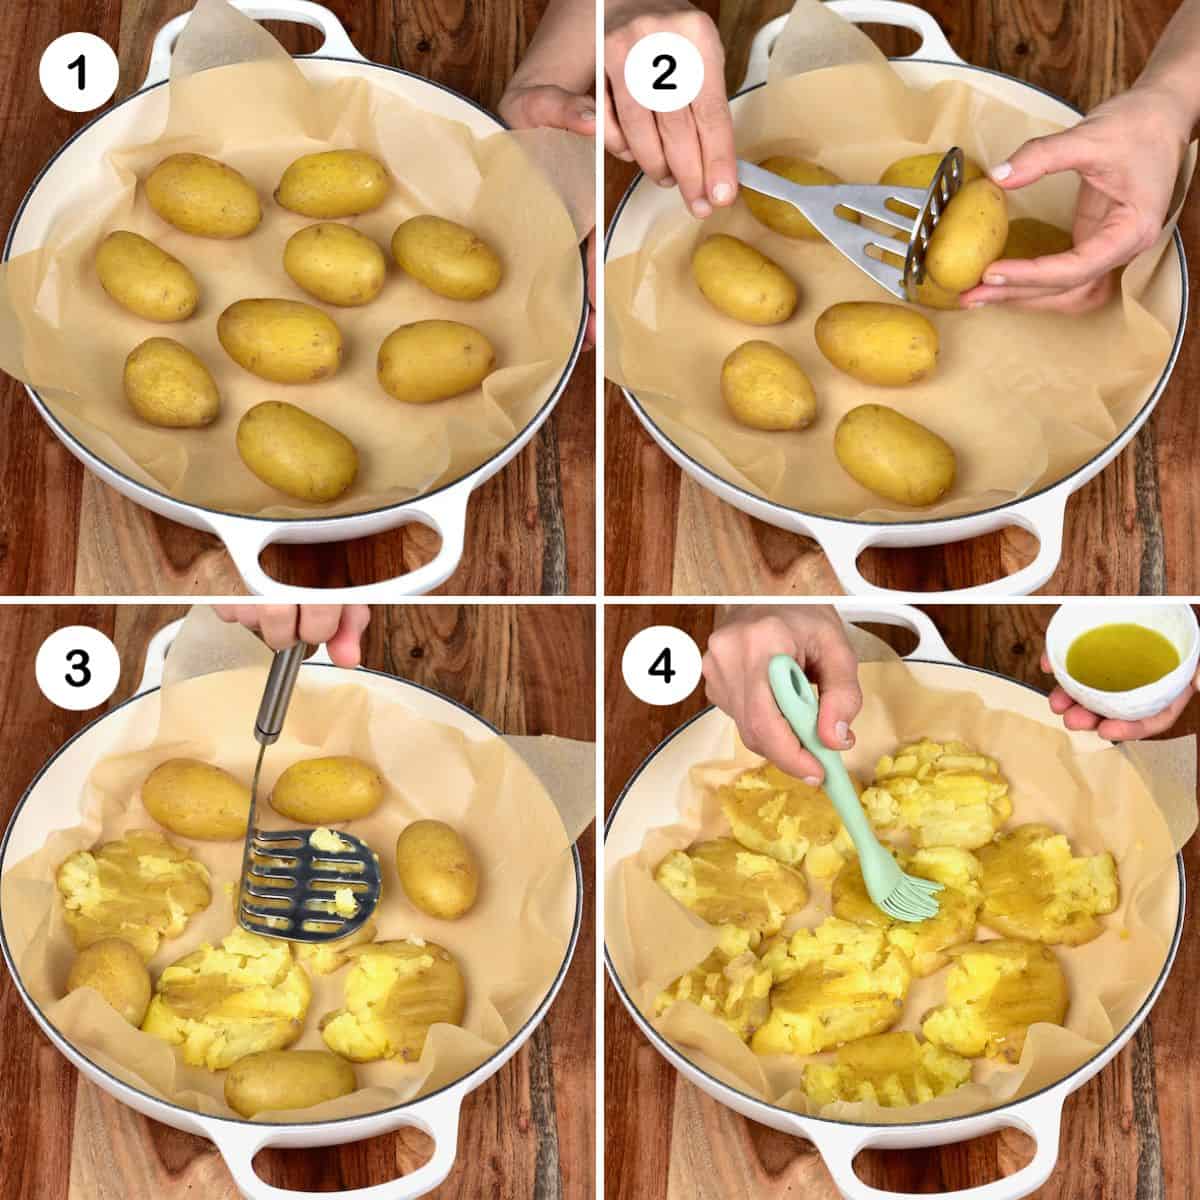 Smashing boiled potatoes and adding oil